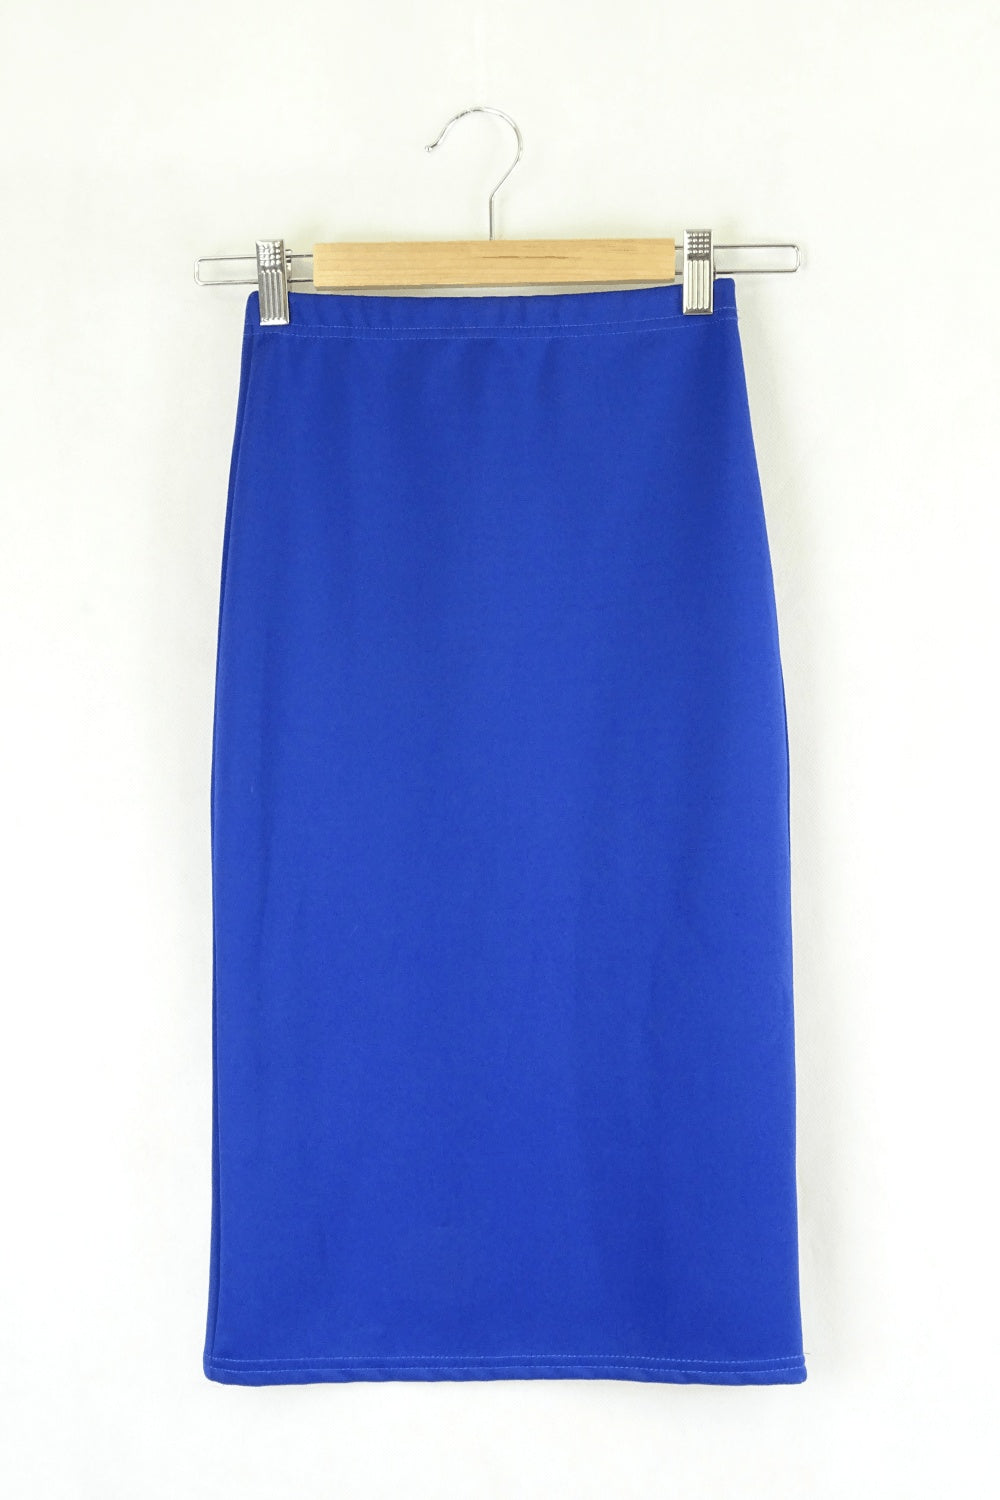 Club L Cropped Top Blue Matching Skirt Blue 4